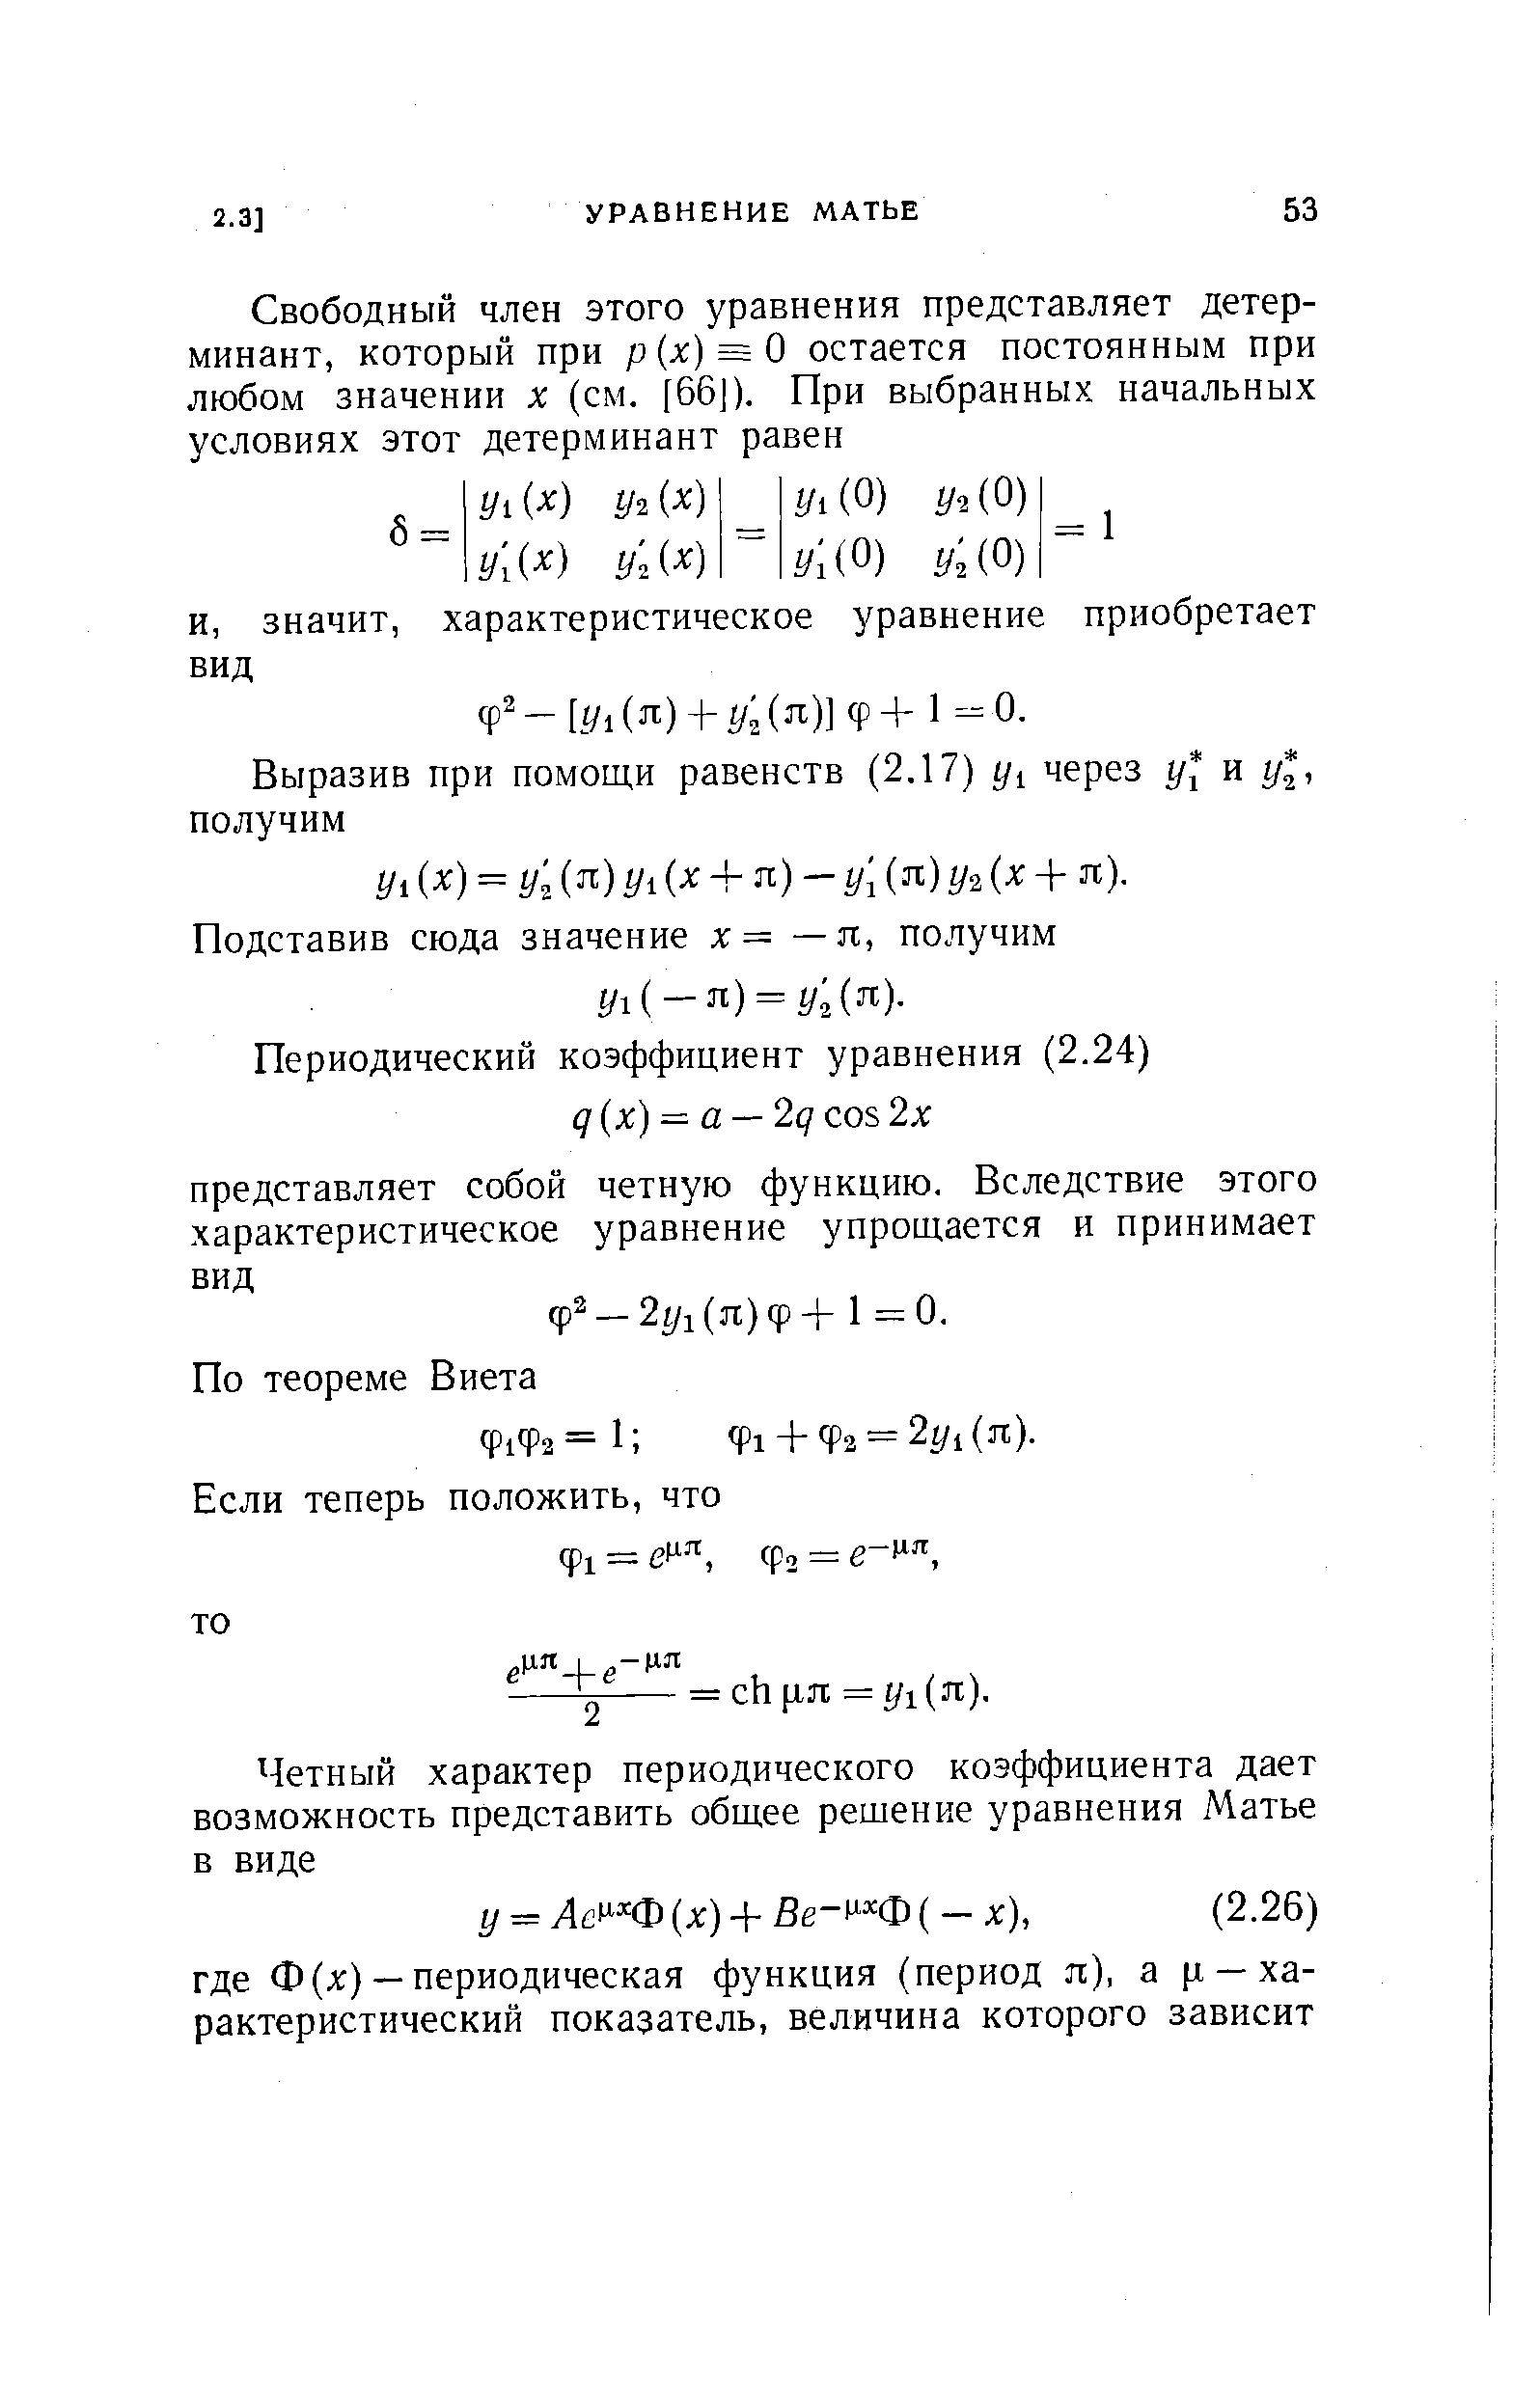 Подставив сюда значение х = —п, получим г/г(-я)= г/ (я).
